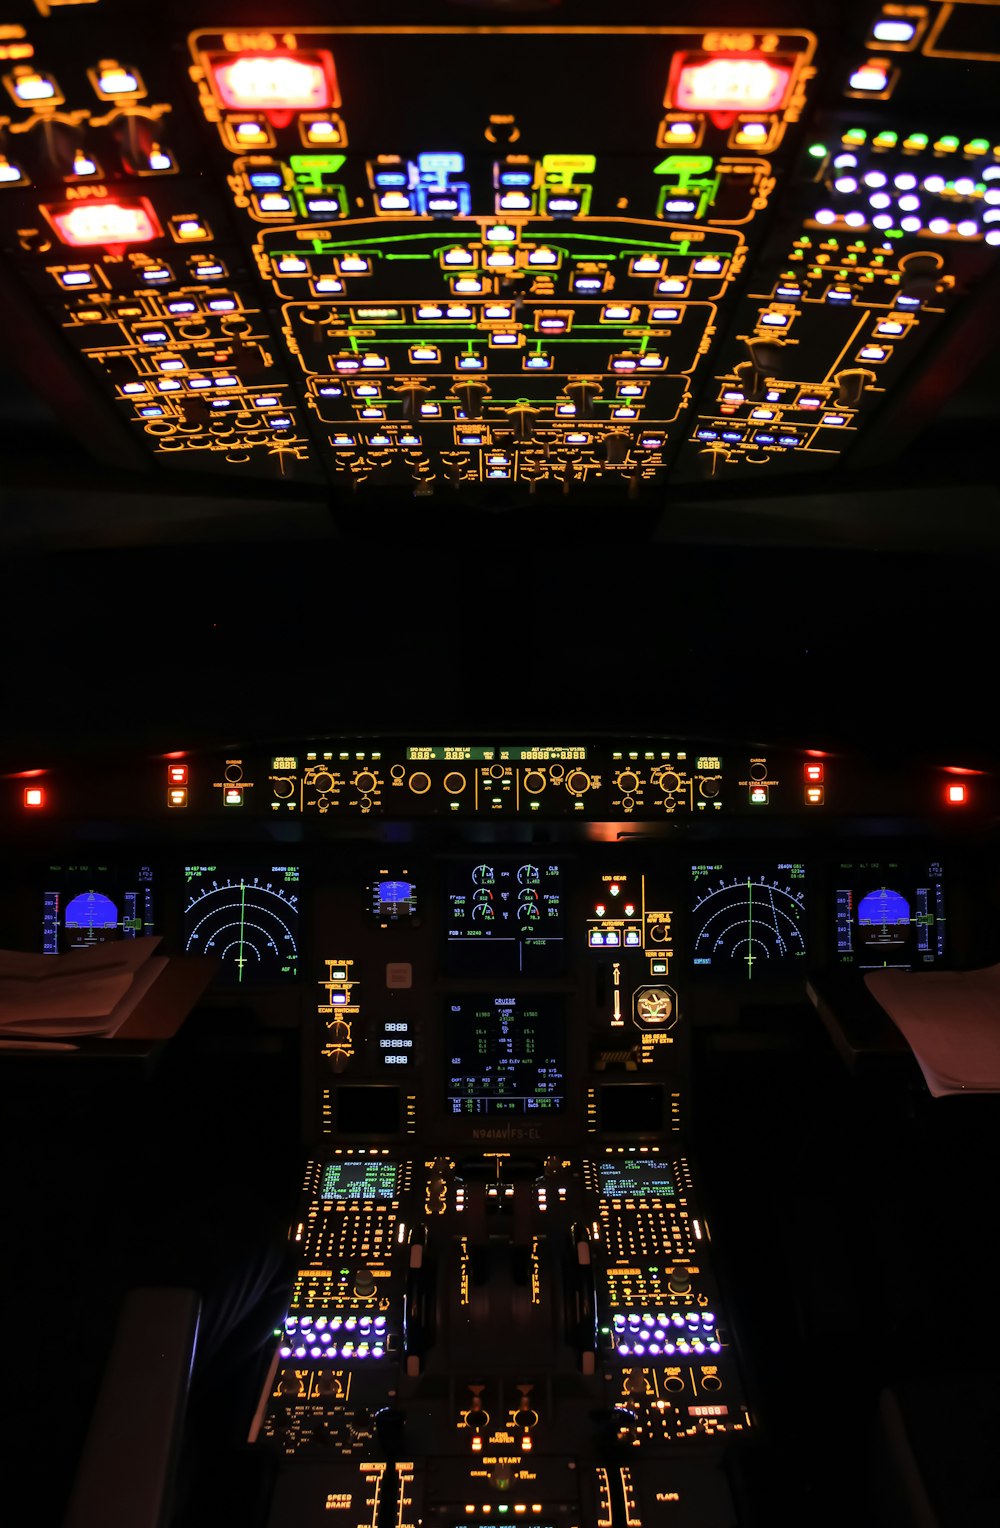 750+ Cockpit Pictures [HD] | Download Free Images on Unsplash